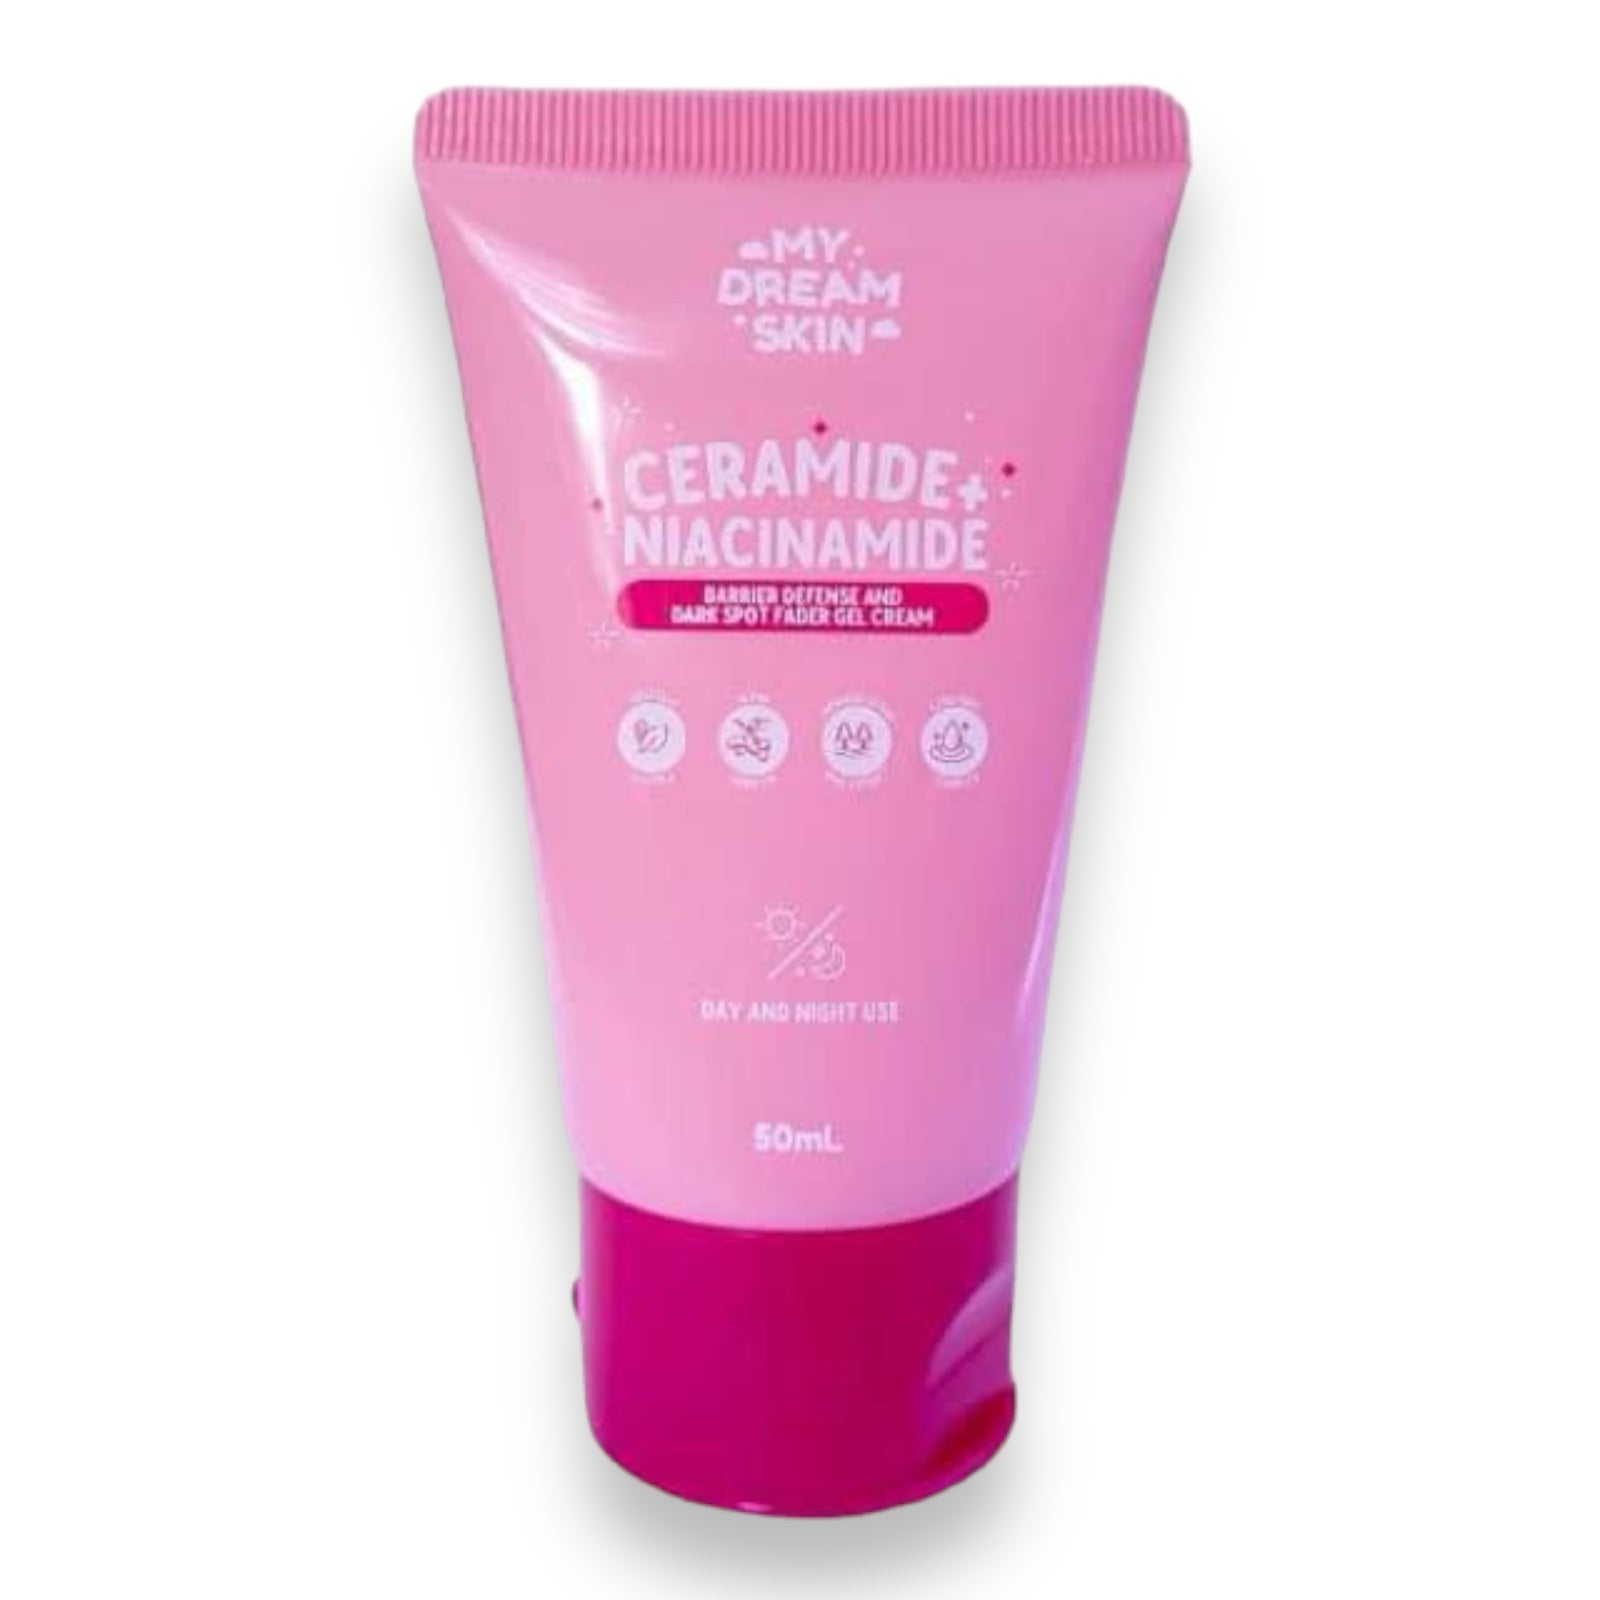 My Dream Skin - Ceramide + Niacinamide Barrier Defense and Dark Spot Fadee Gel Cream 50ml